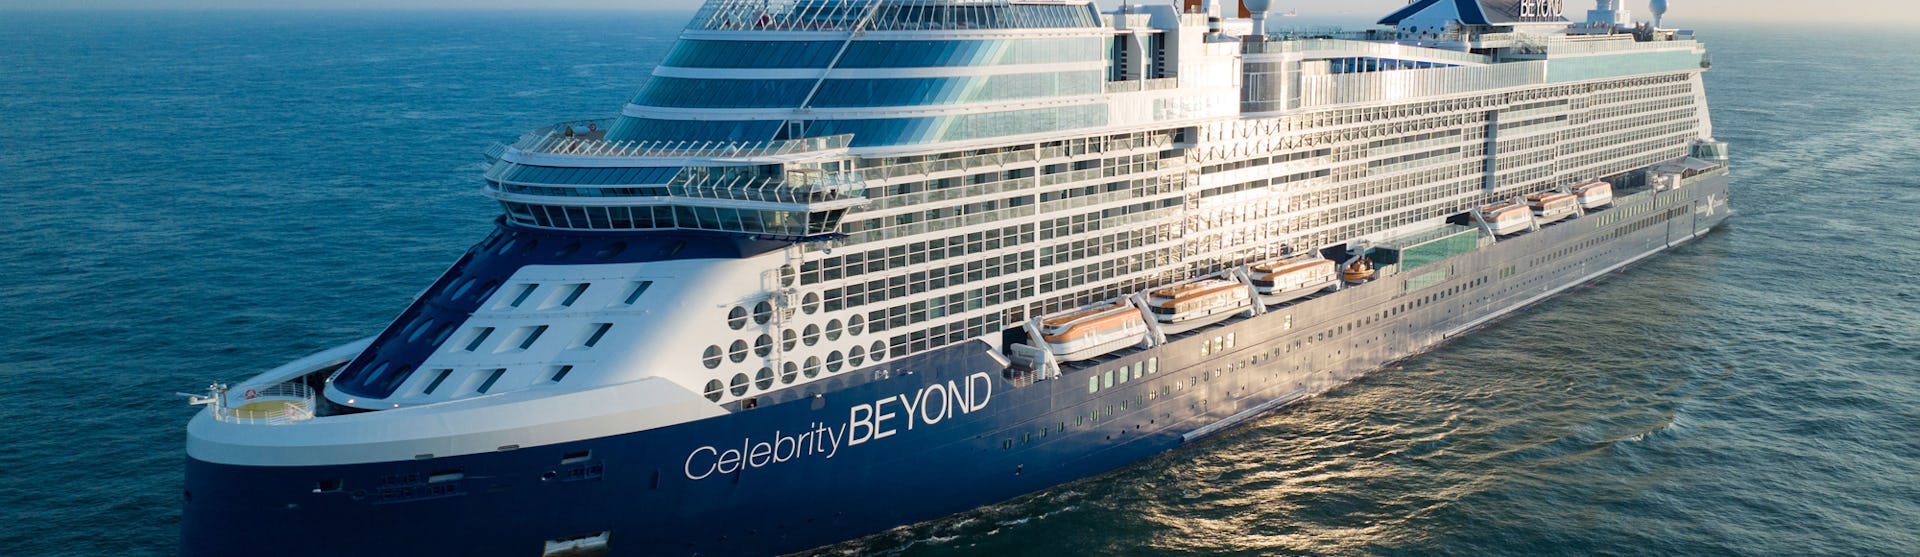 Celebrity Beyond - Celebrity Cruise